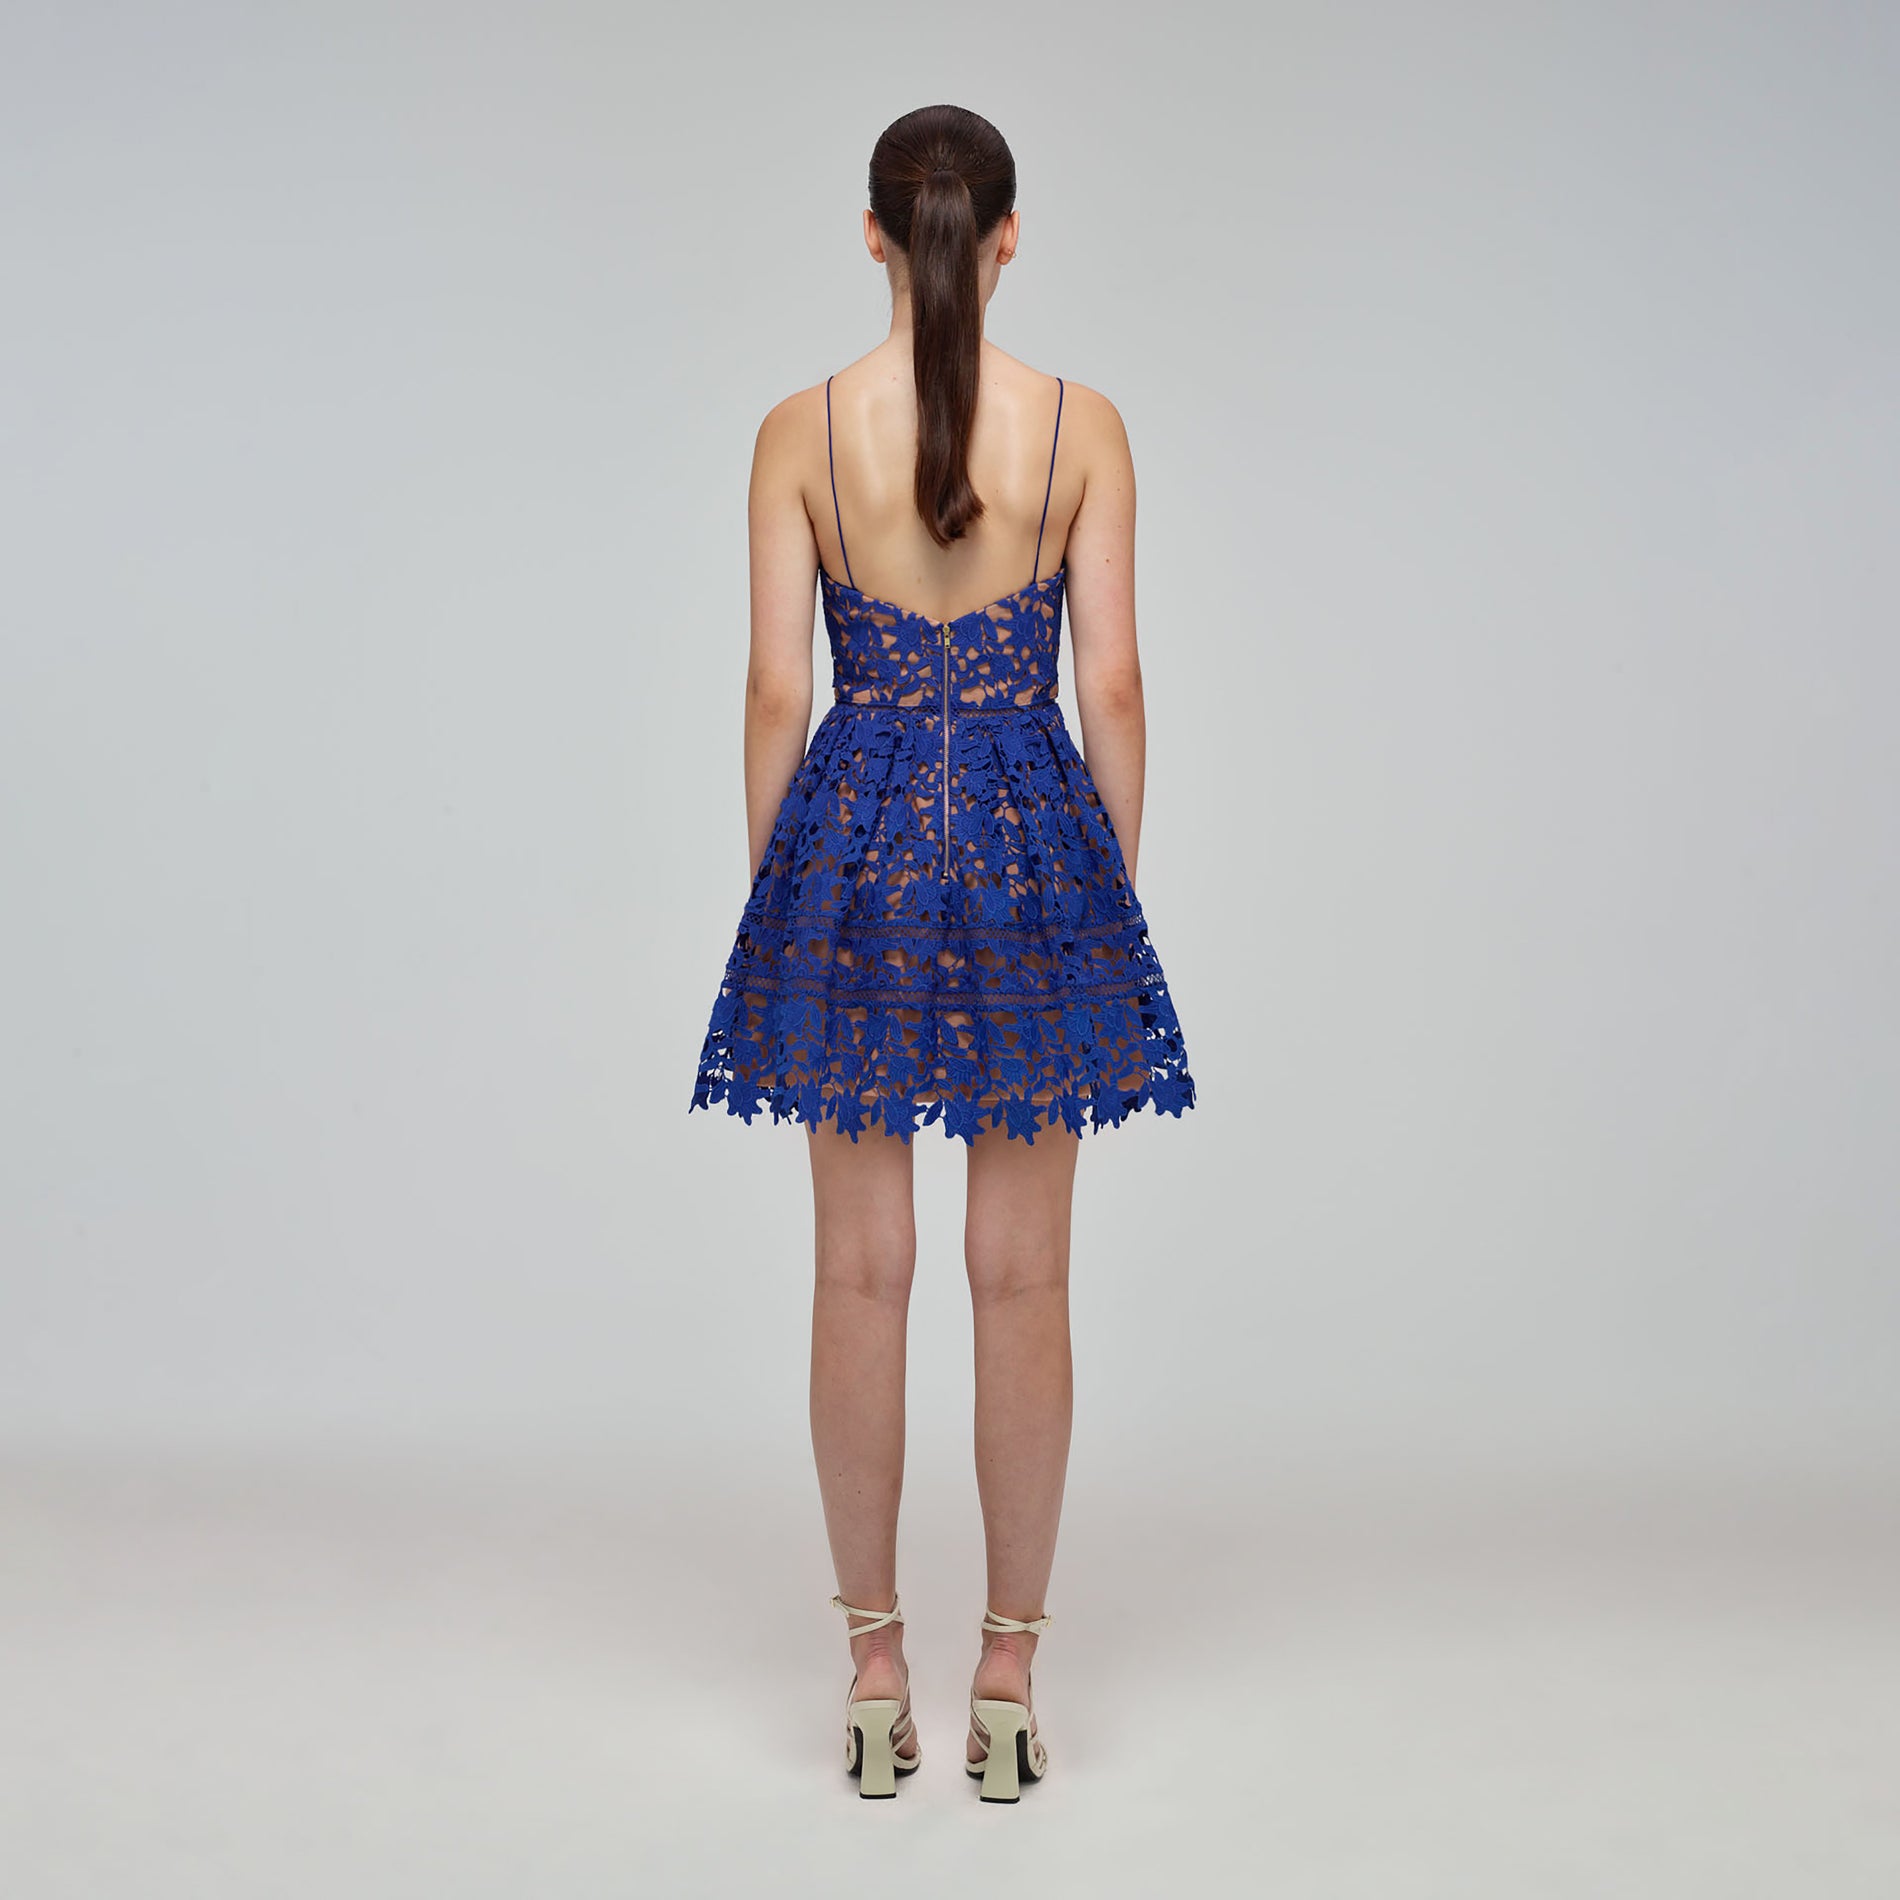 A woman wearing the Deep Blue Azaelea Mini Dress